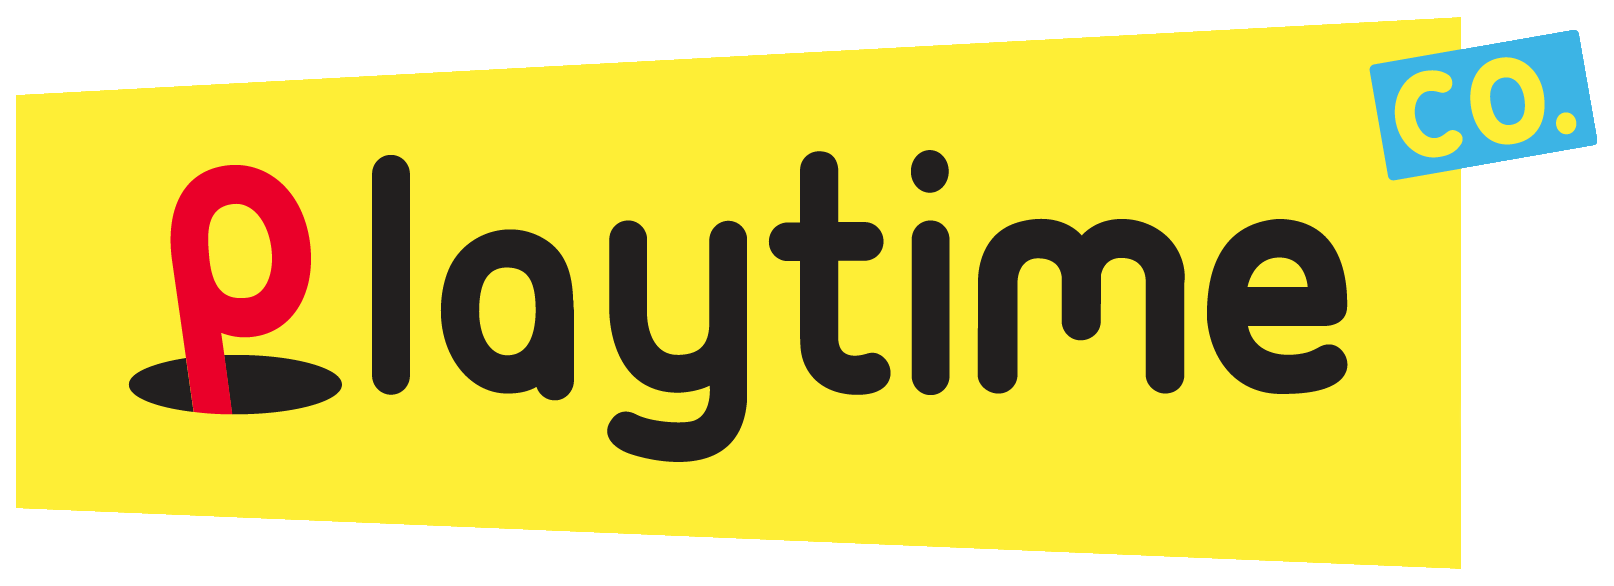 Store playtime. Playtime co. Poppy Playtime логотип. Playtime co логотип. Логотип Поппи плей тайм.